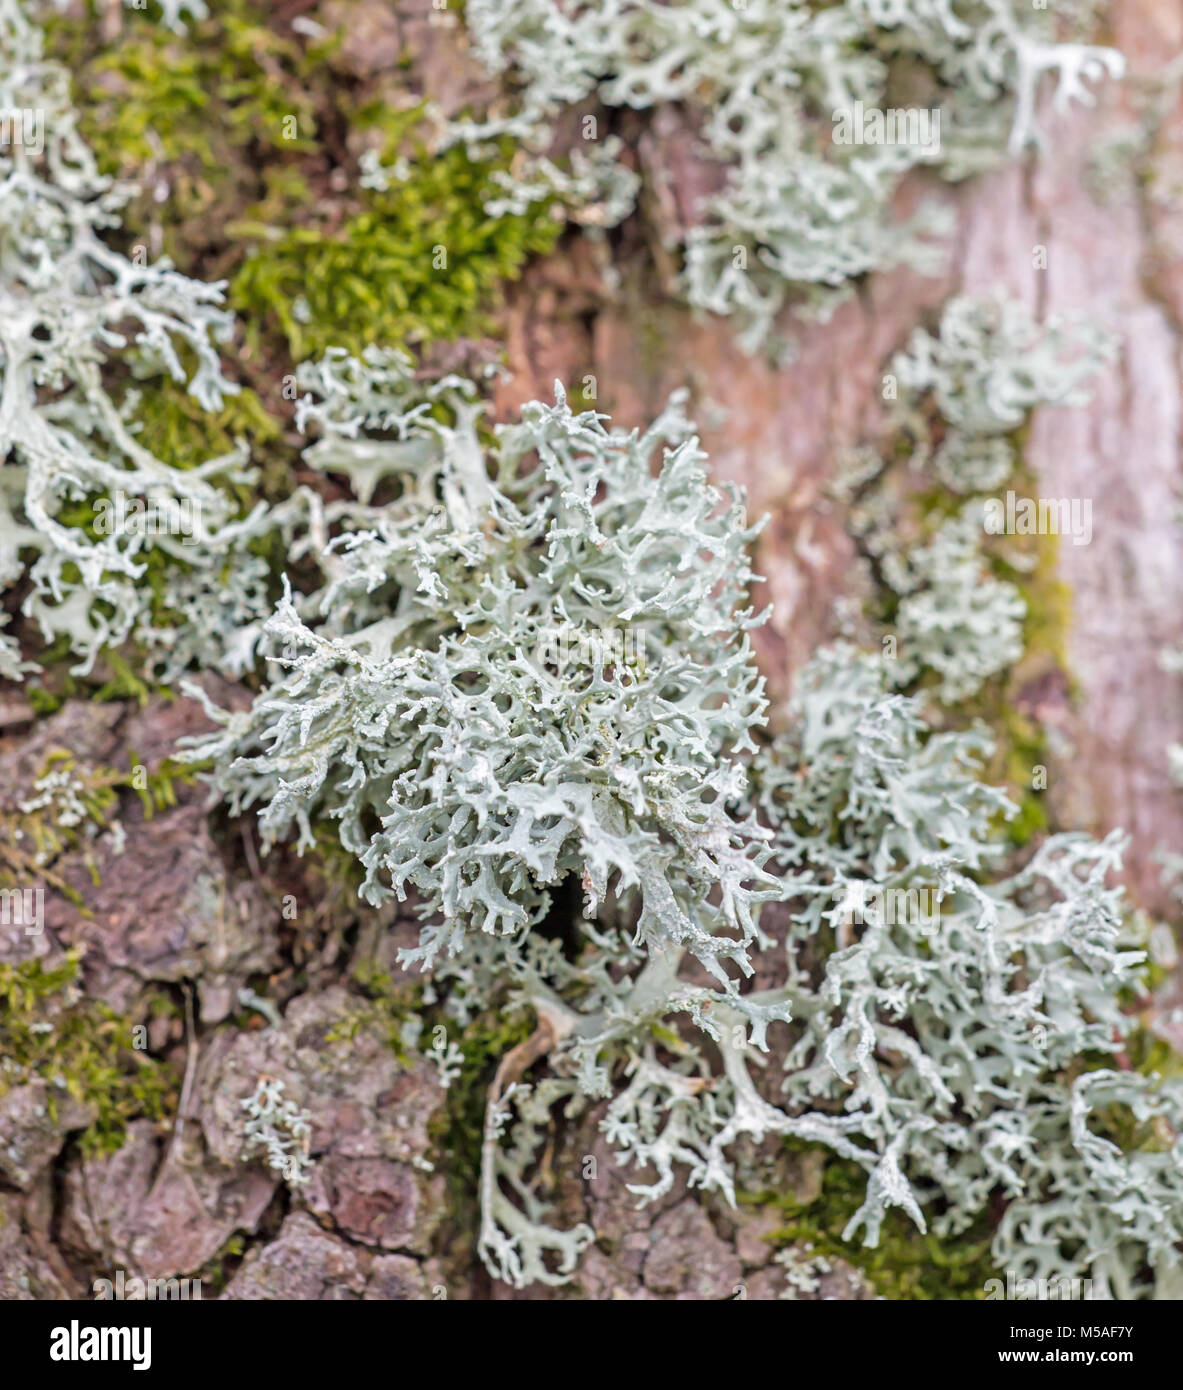 A grey lichen, Ramalina farinacea, growing on tree bark Stock Photo